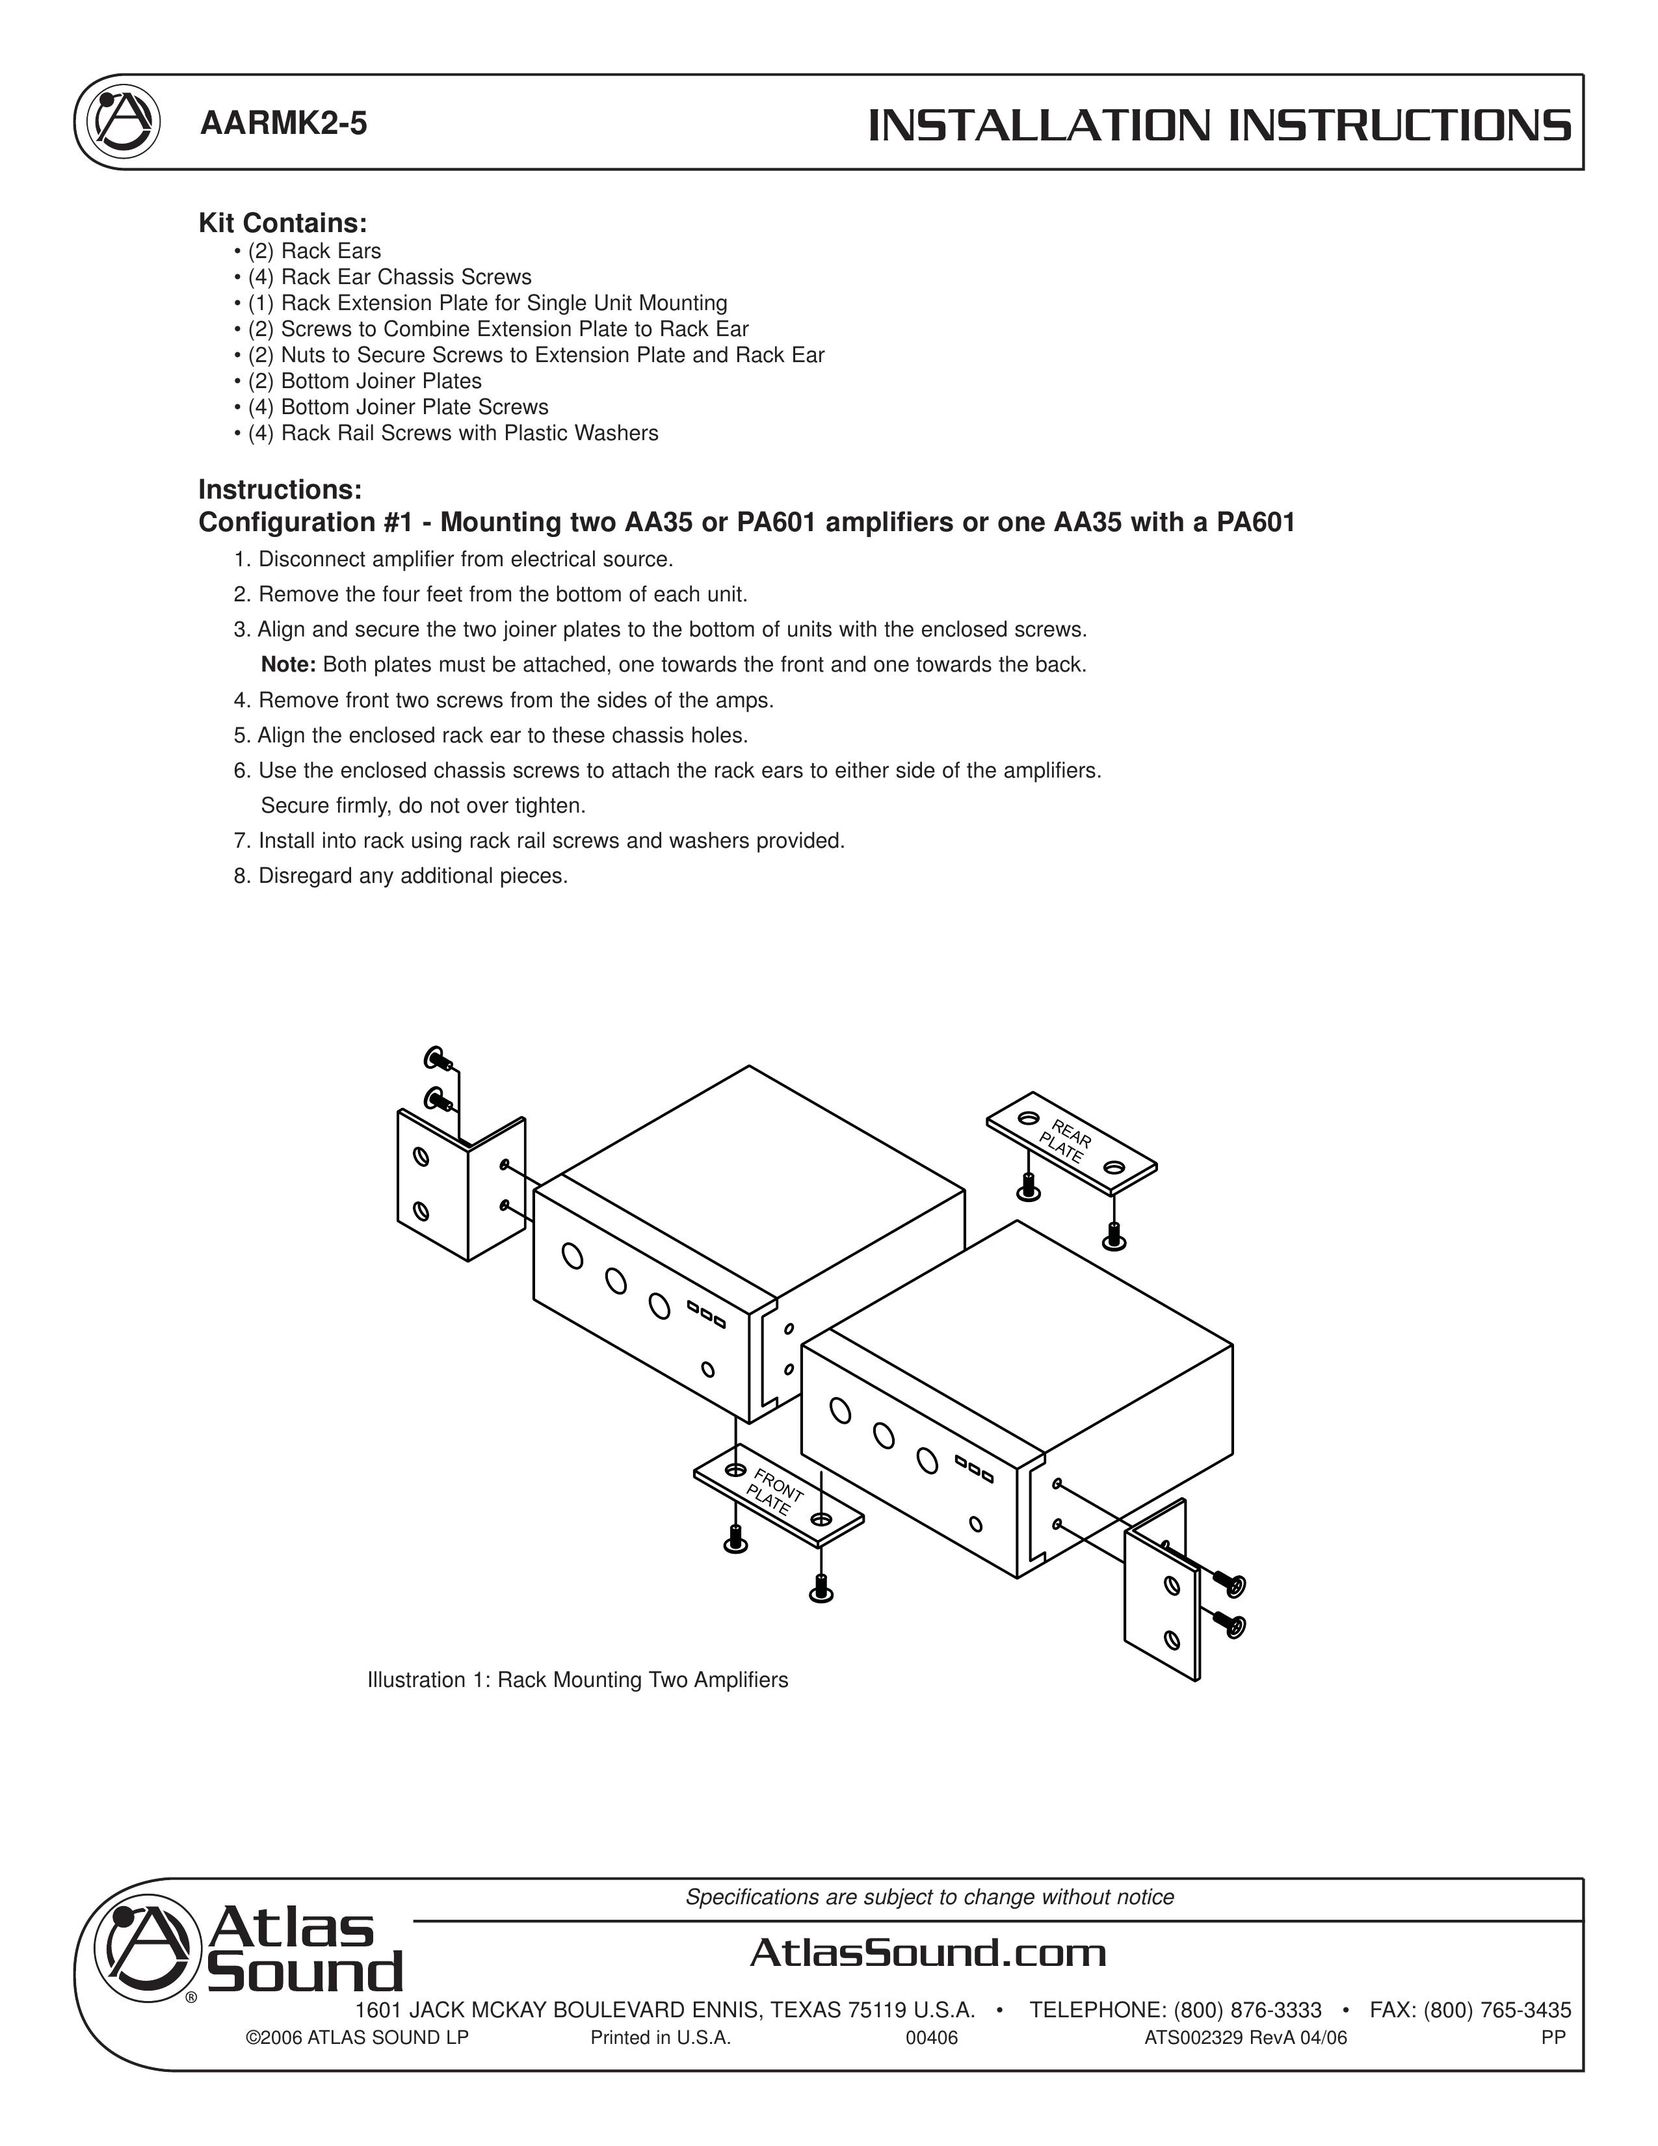 Atlas Sound AARMK2-5 Stereo Amplifier User Manual